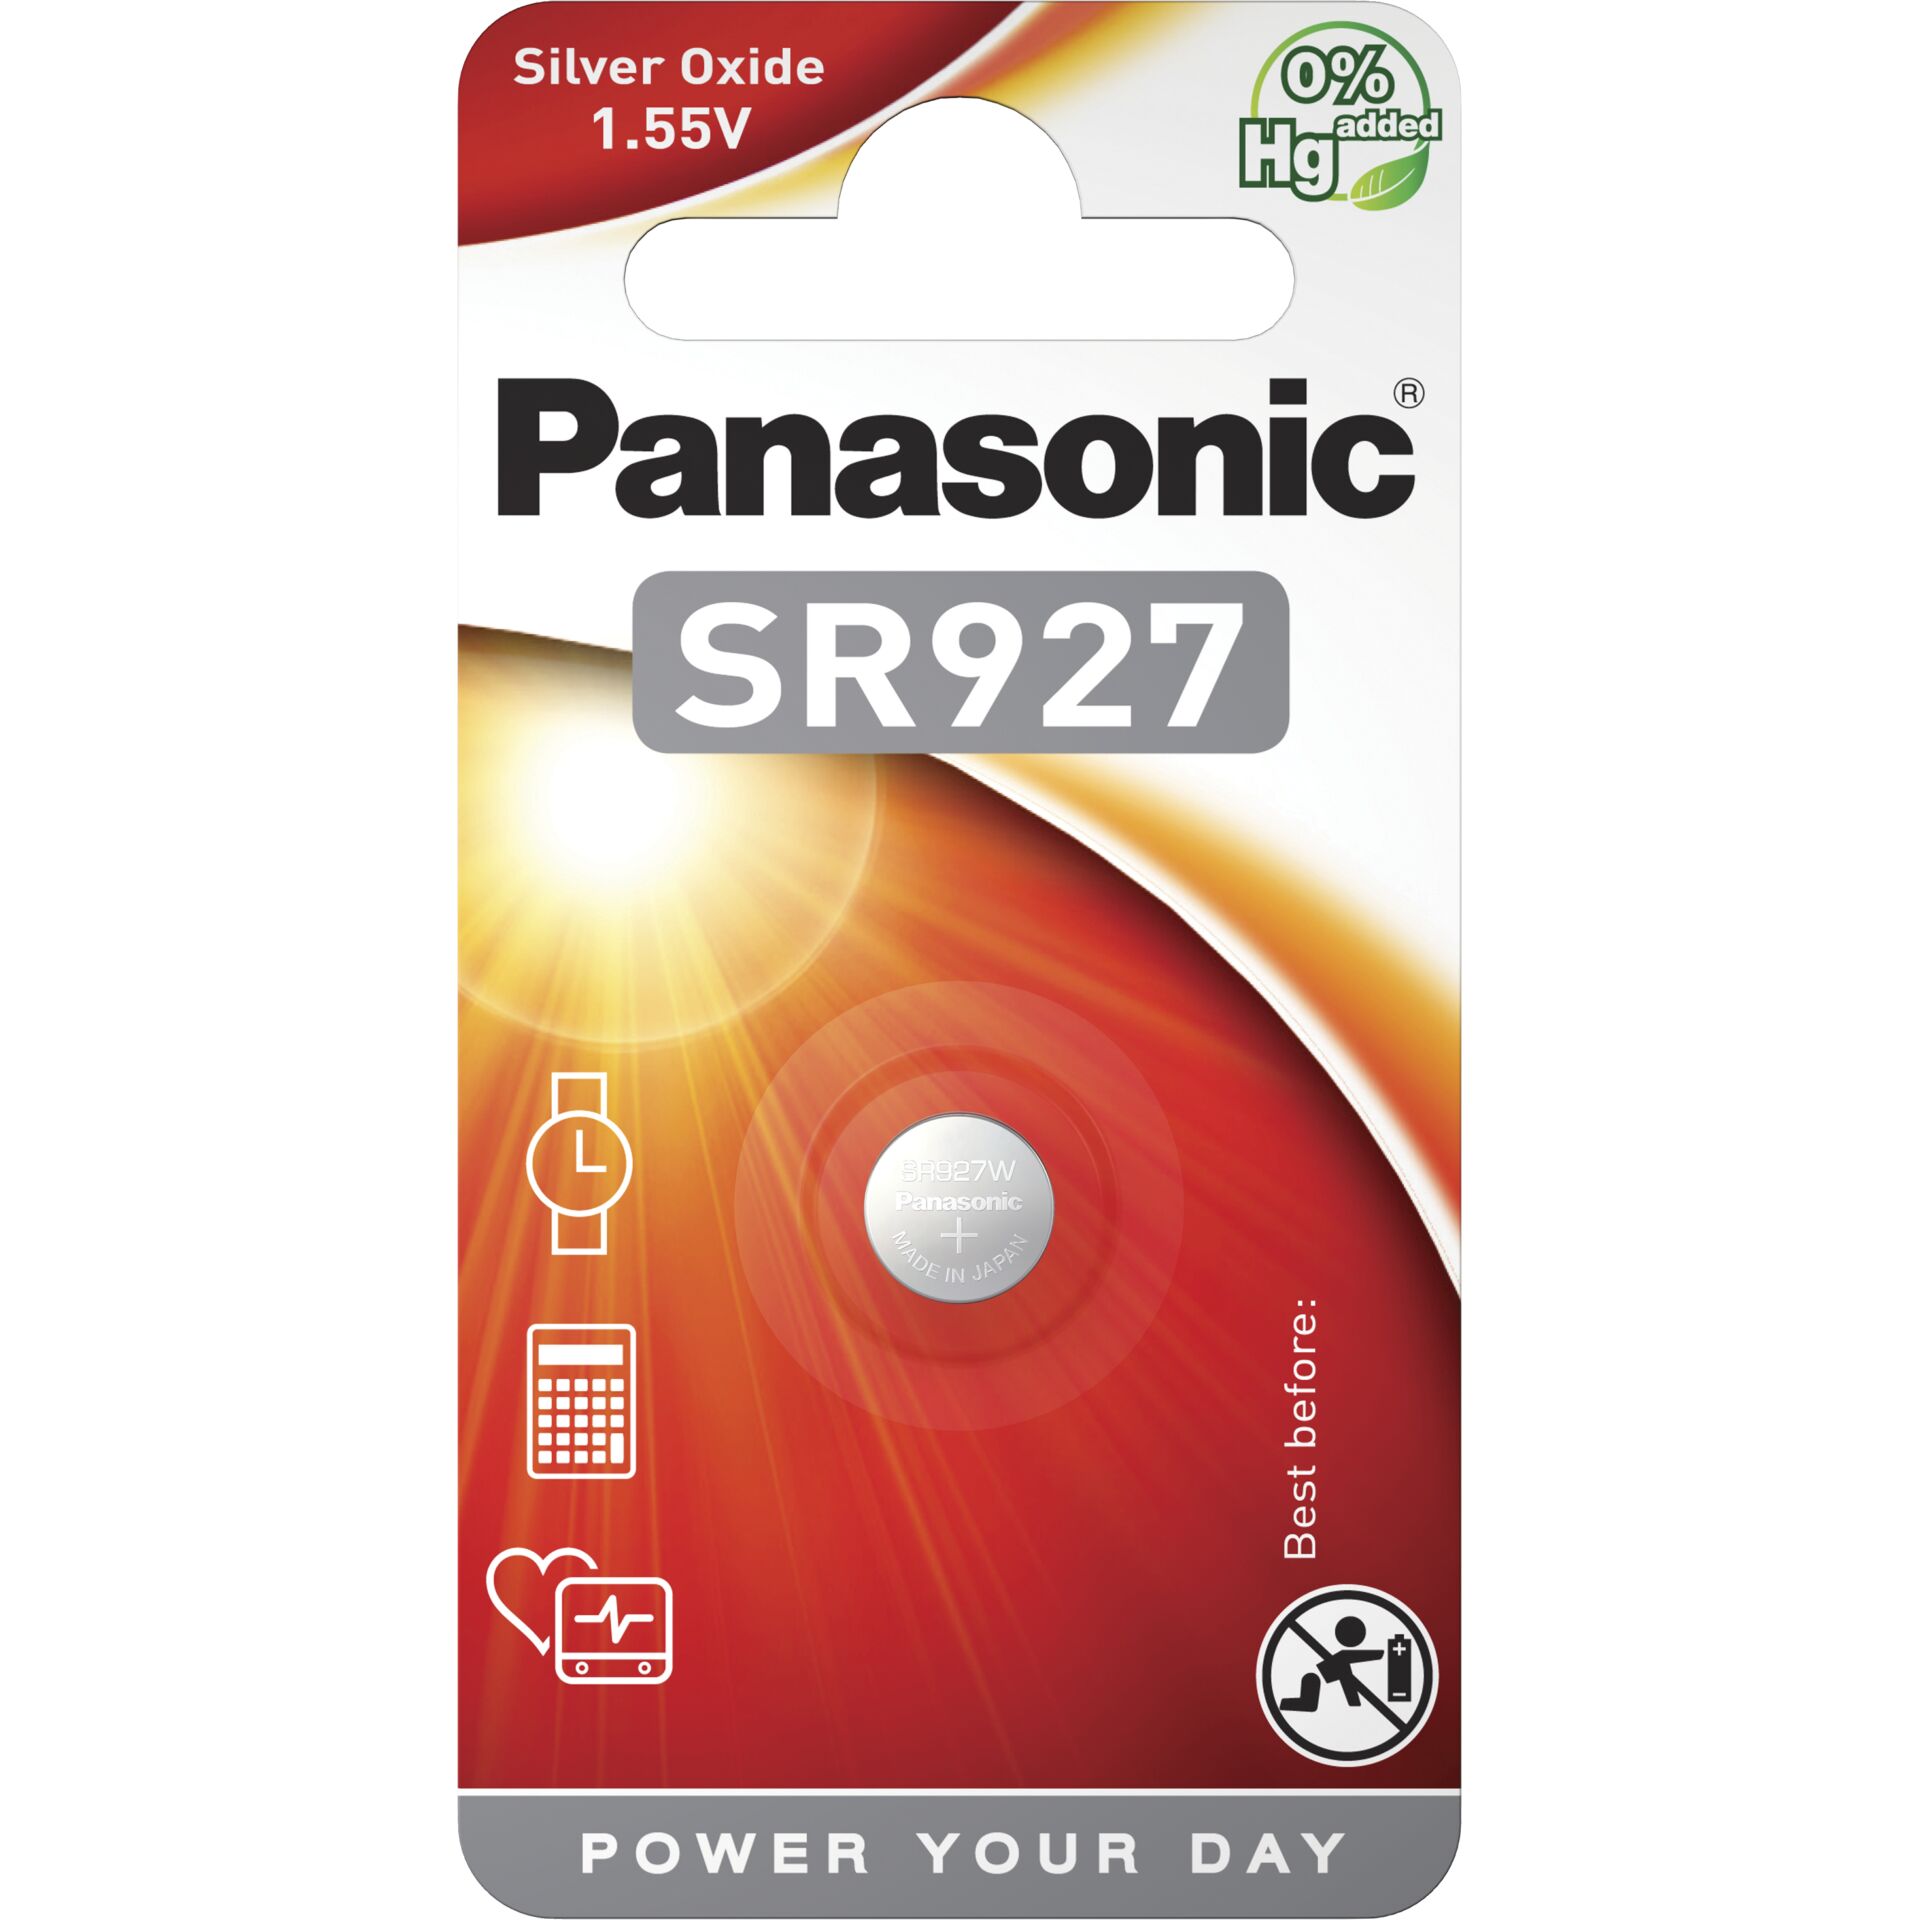 Panasonic SR-927 EL